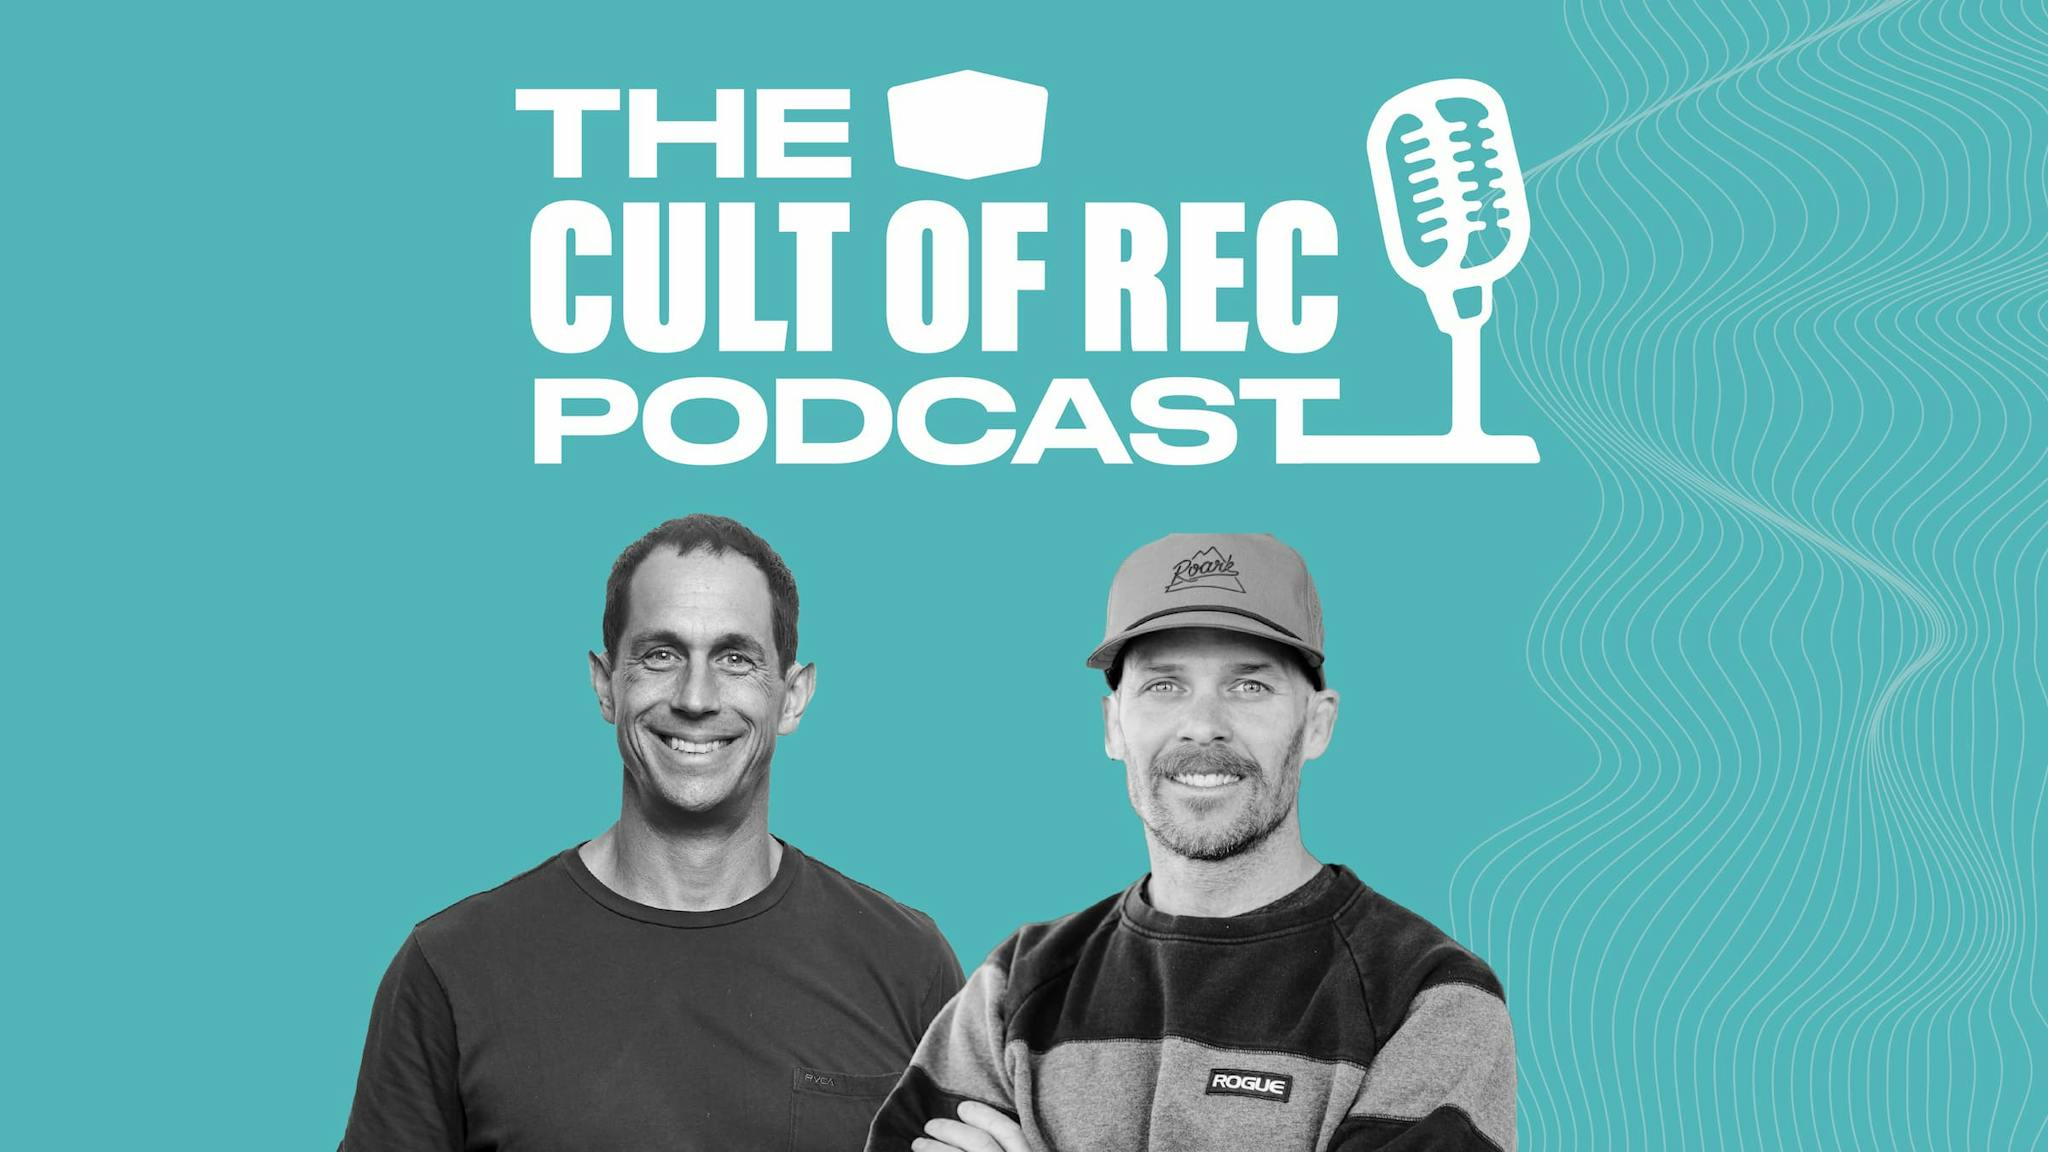 Chris Spealler - The Cult of Rec Podcast, Episode 4